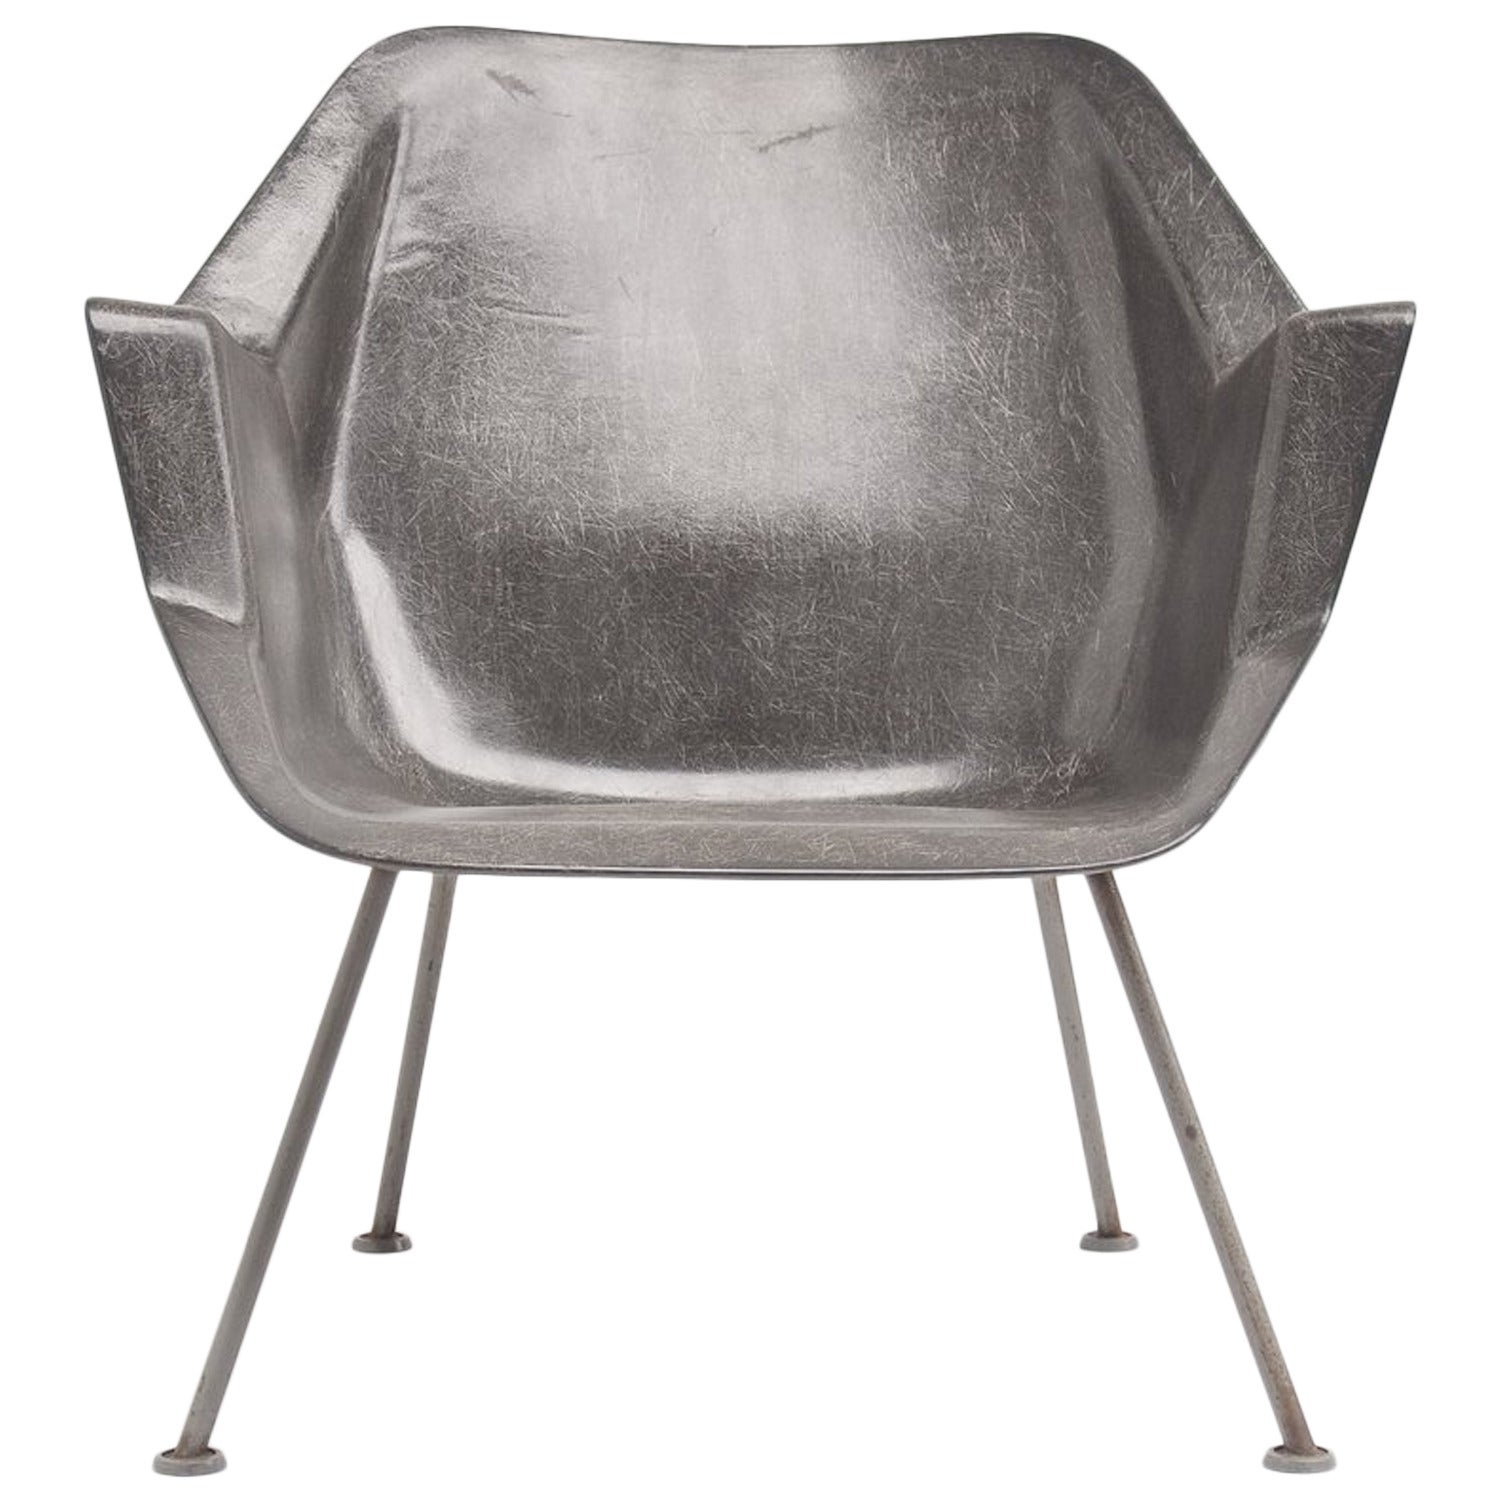 Wim Rietveld Polyester Chair No. 416, Gispen, 1957